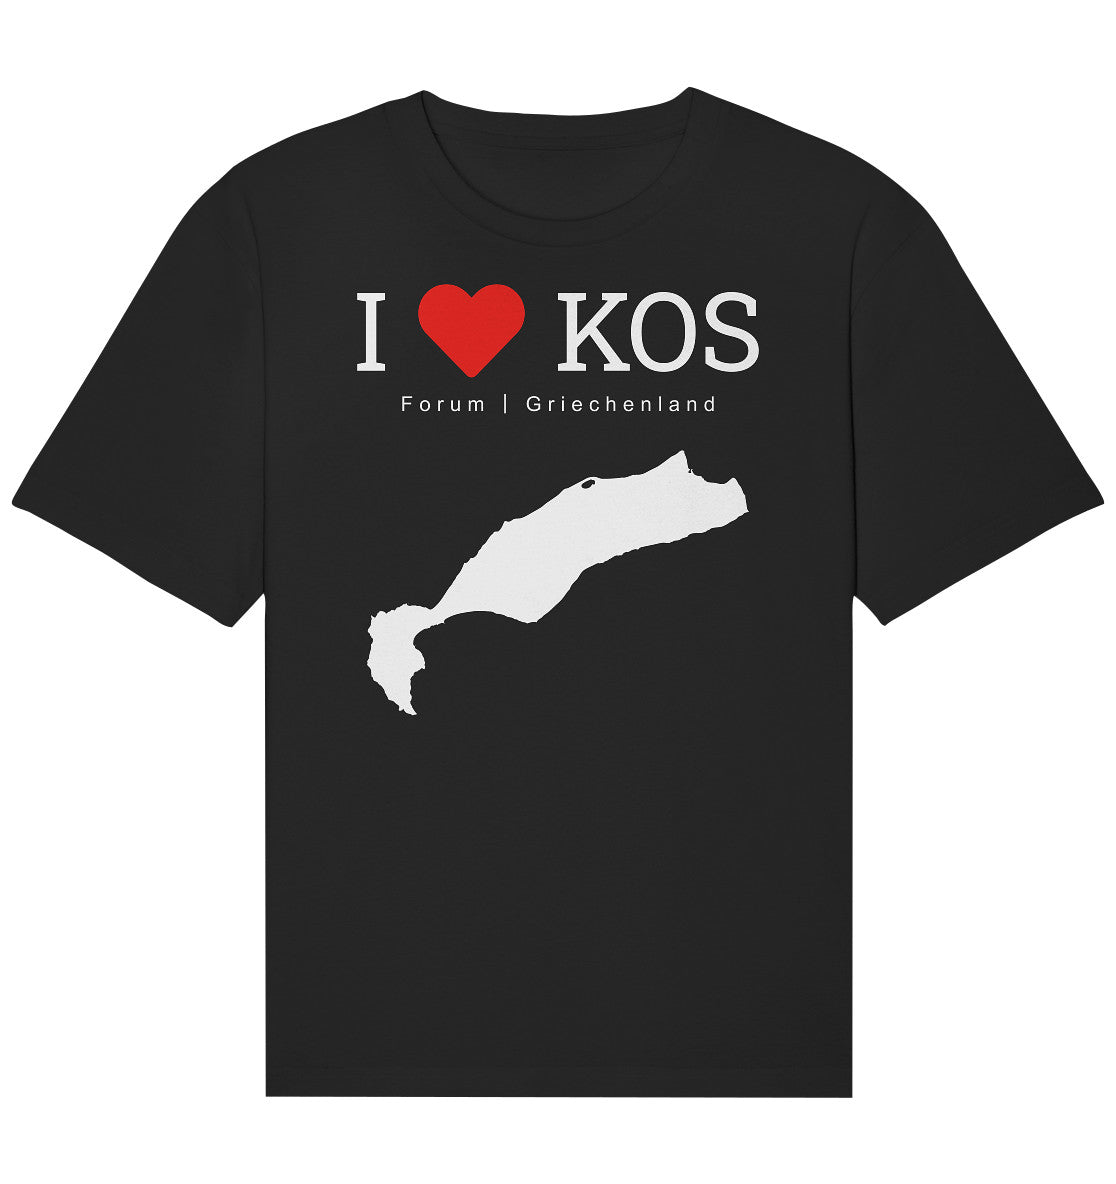 I LOVE KOS - Forum Greece White - Organic Relaxed Shirt